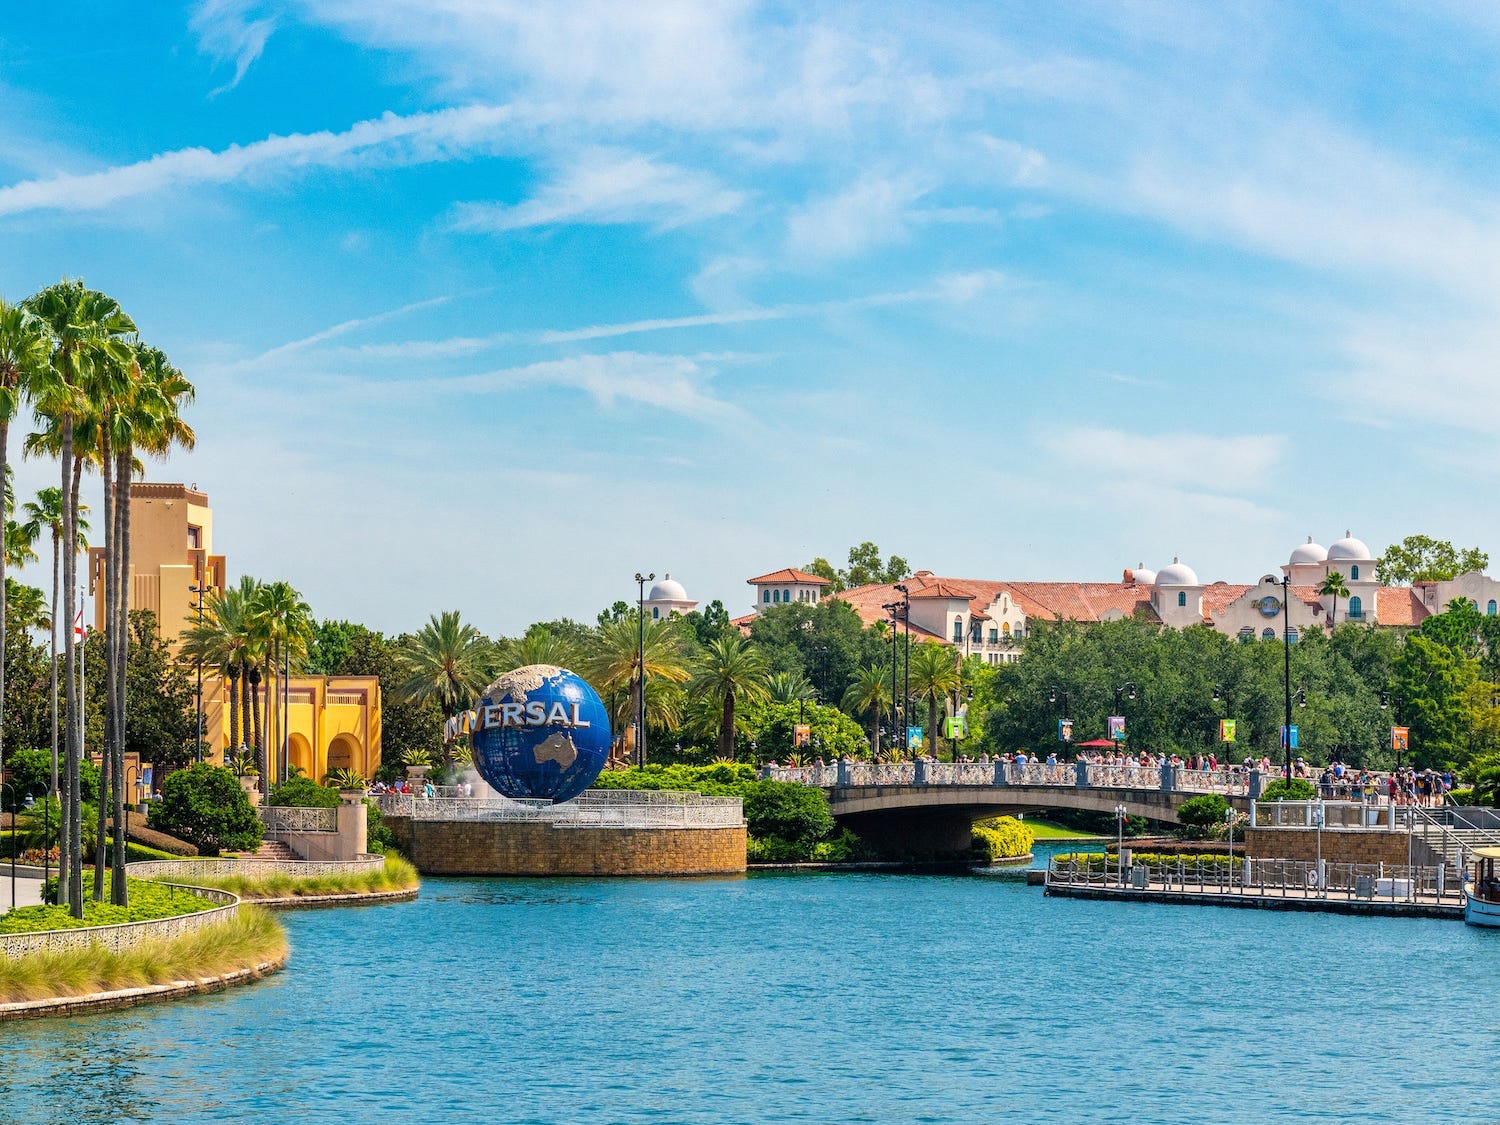 Universal Studios in Orlando, Florida